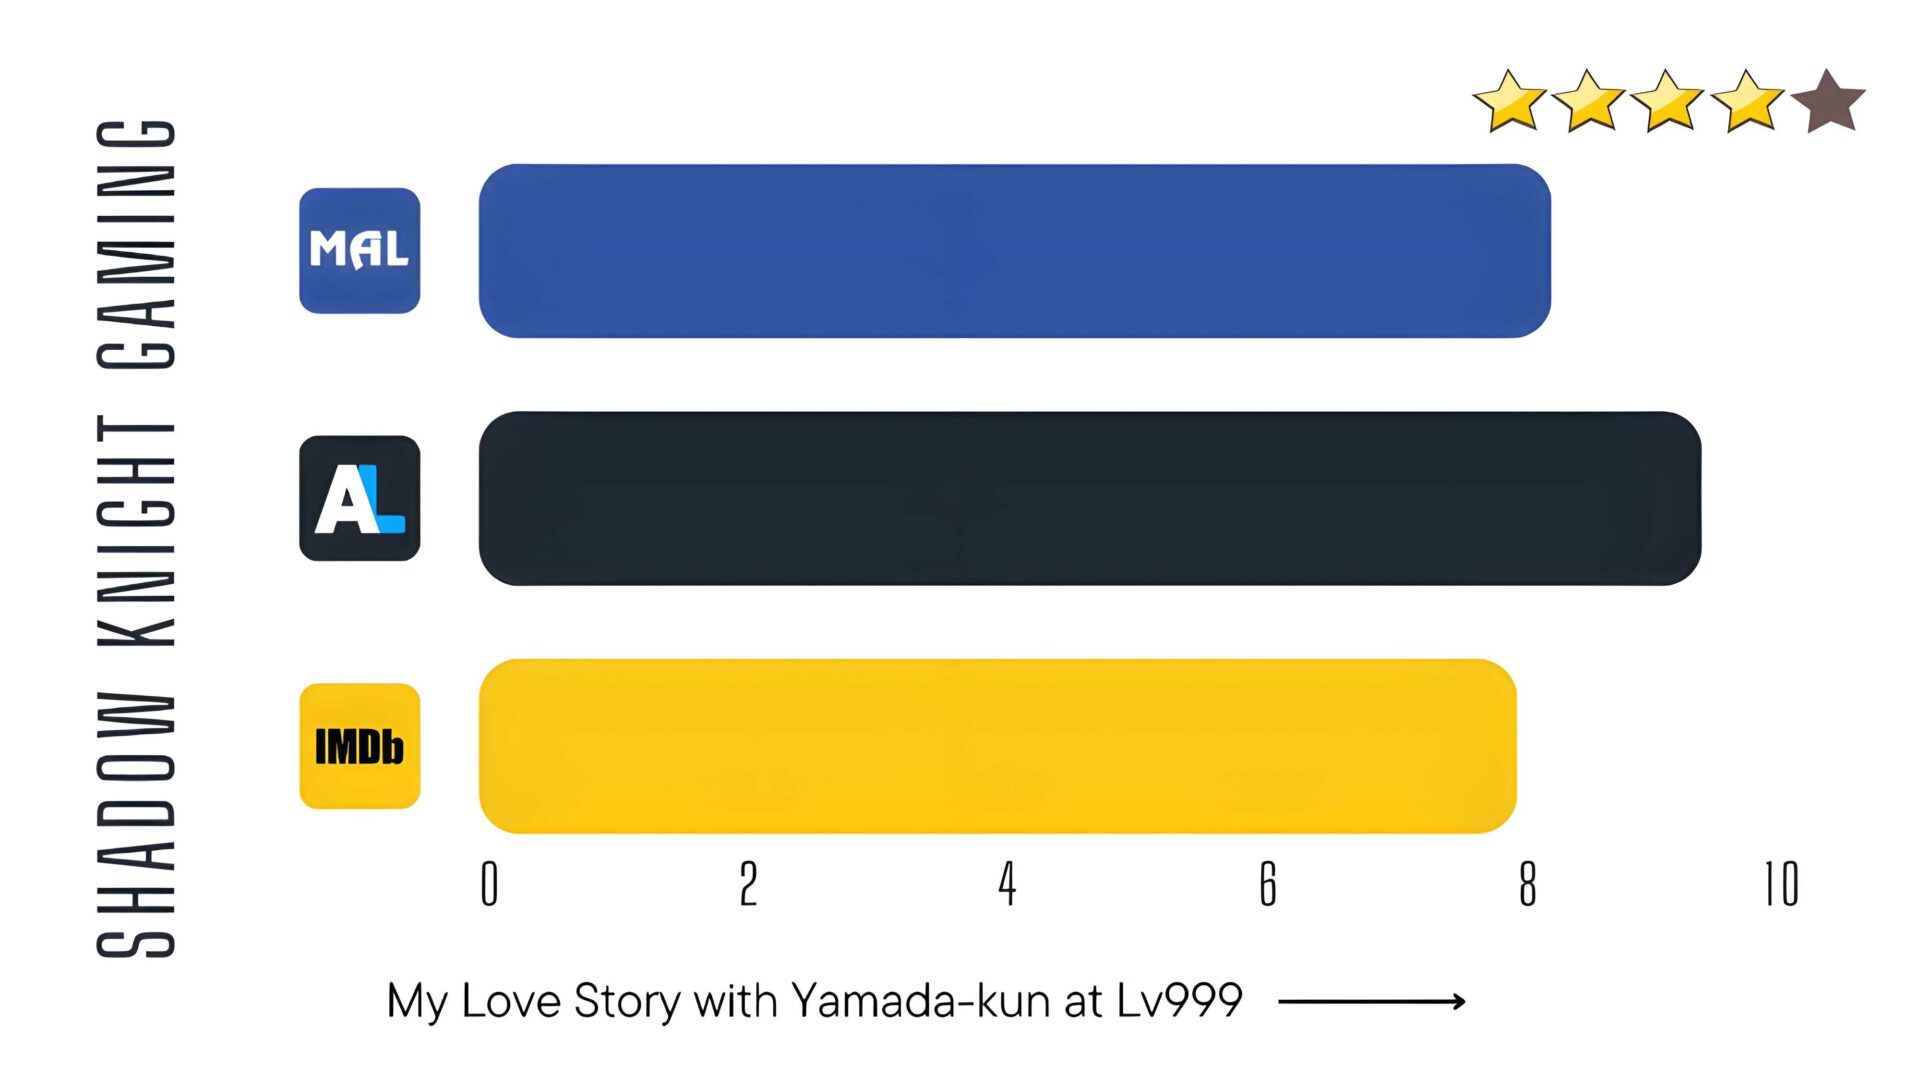 My Love Story with Yamada-kun at Lv999 anime ratings